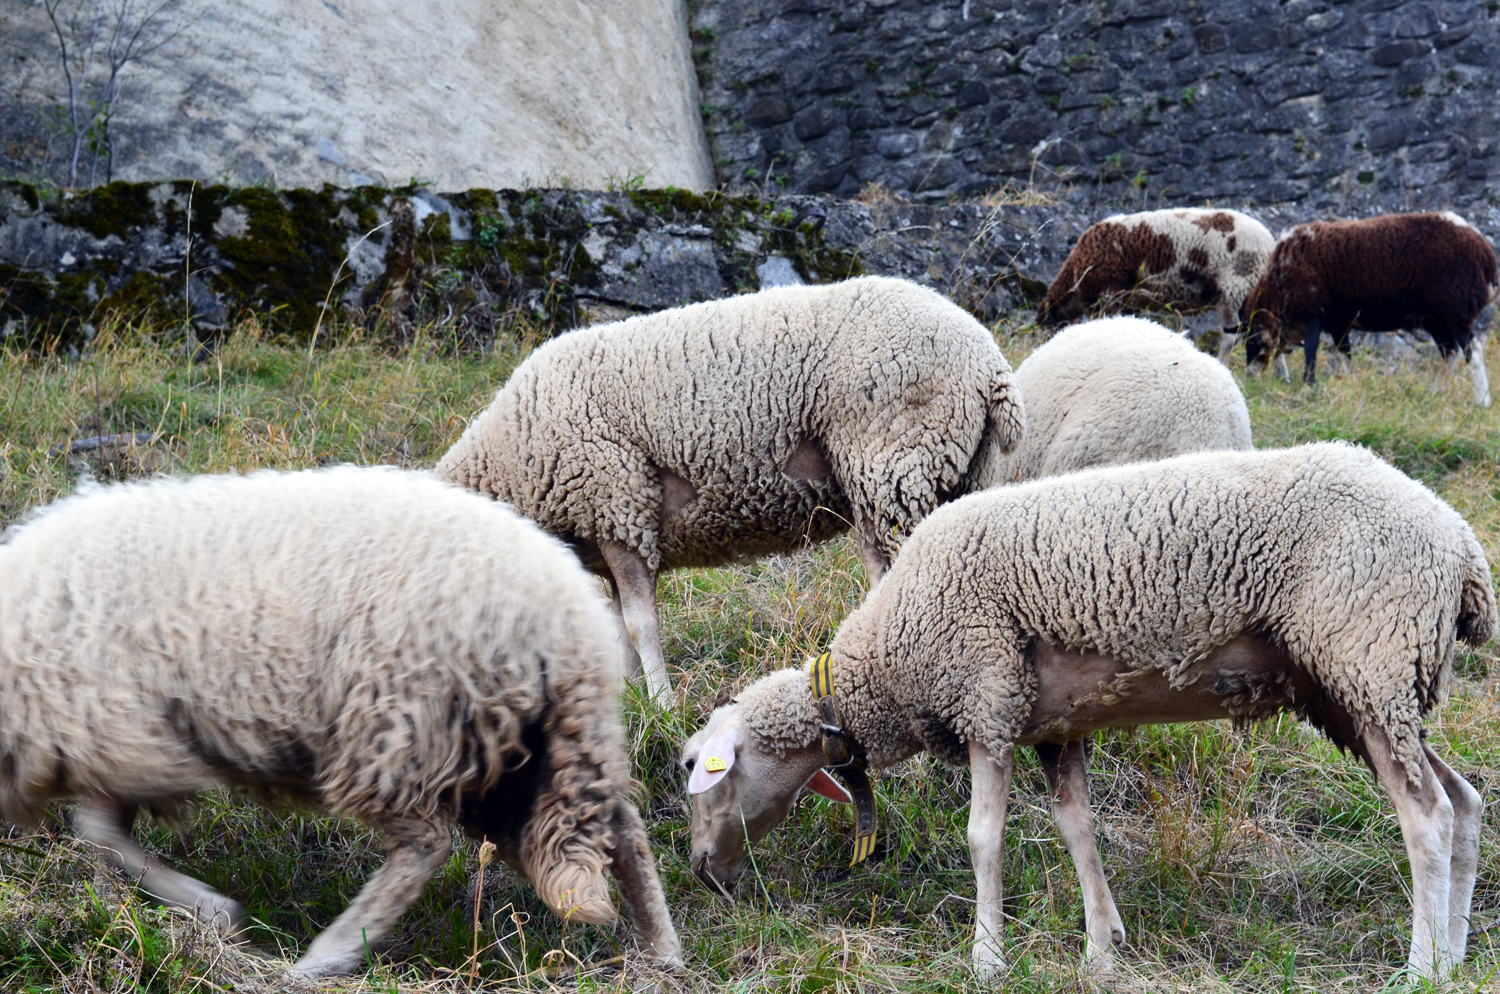 mercredie-blog-geneve-suisse-voyage-my-switzerland-grand-tour-roadtrip-europcar-accor-hotel-gruyeres-musee-hr-giger-chateau-visite-mouton